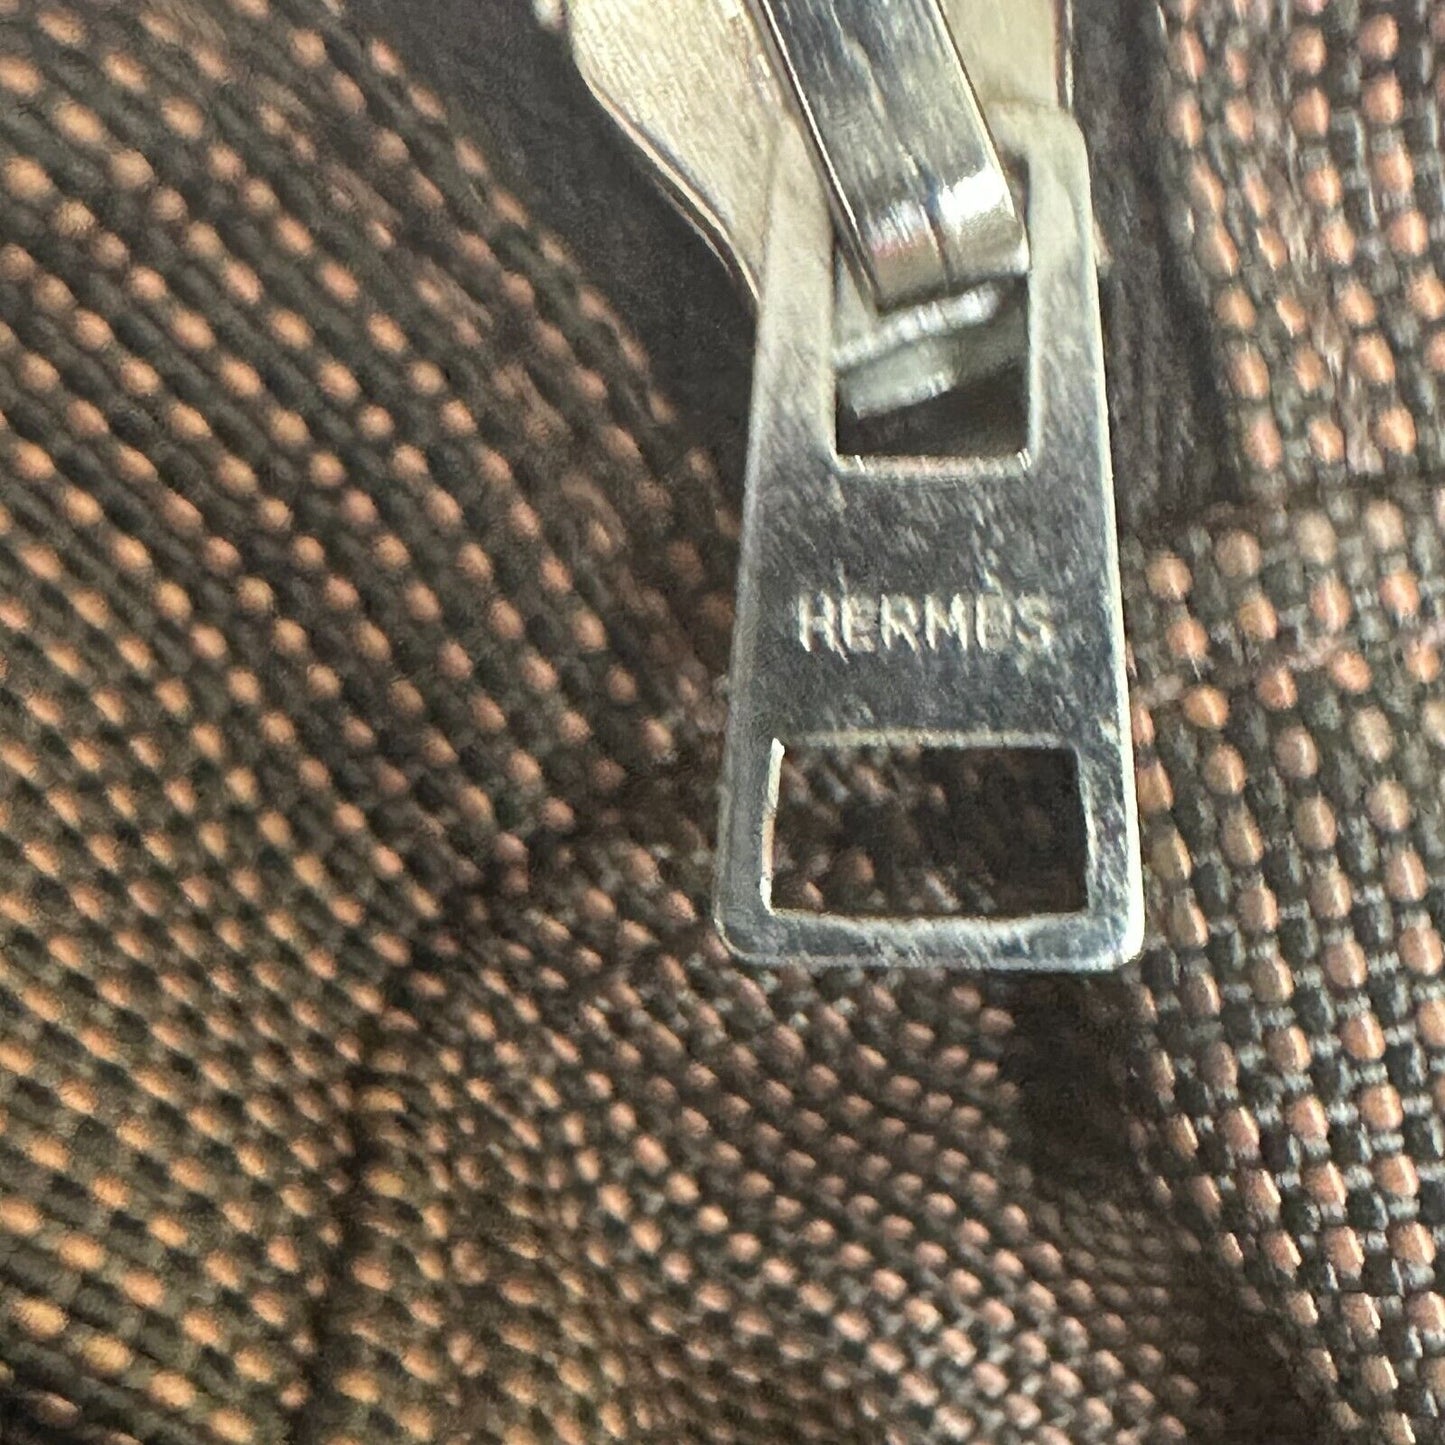 Hermes Paris Her Line Brown MM Tote Handbag Authenticated W/ COA